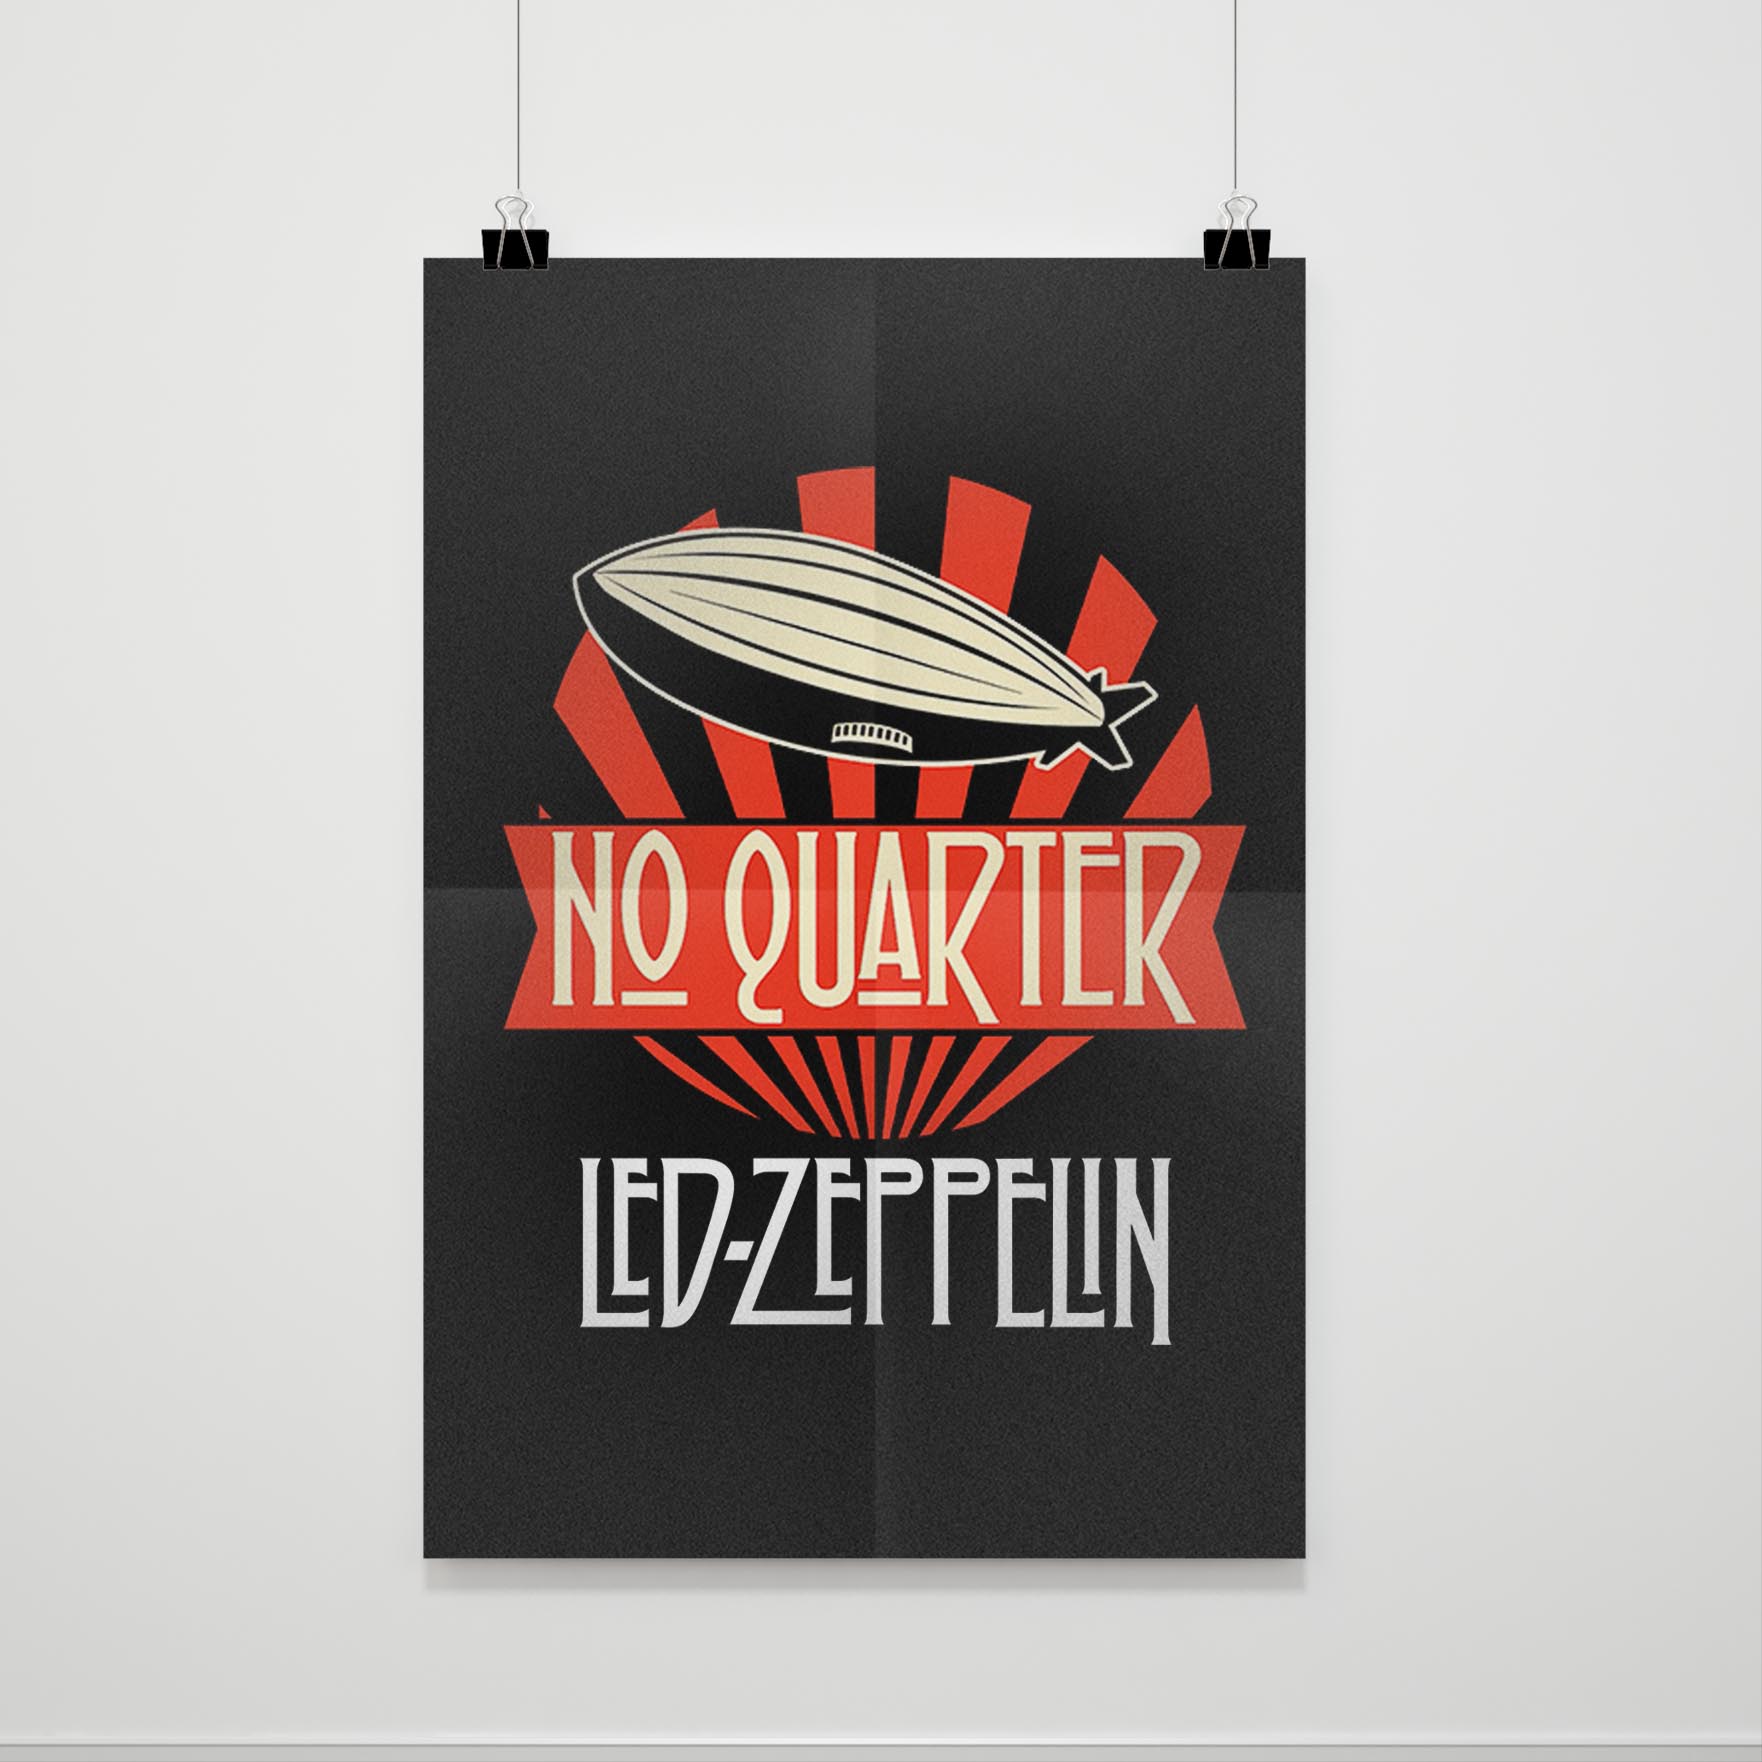 no quarter meaning led zeppelin